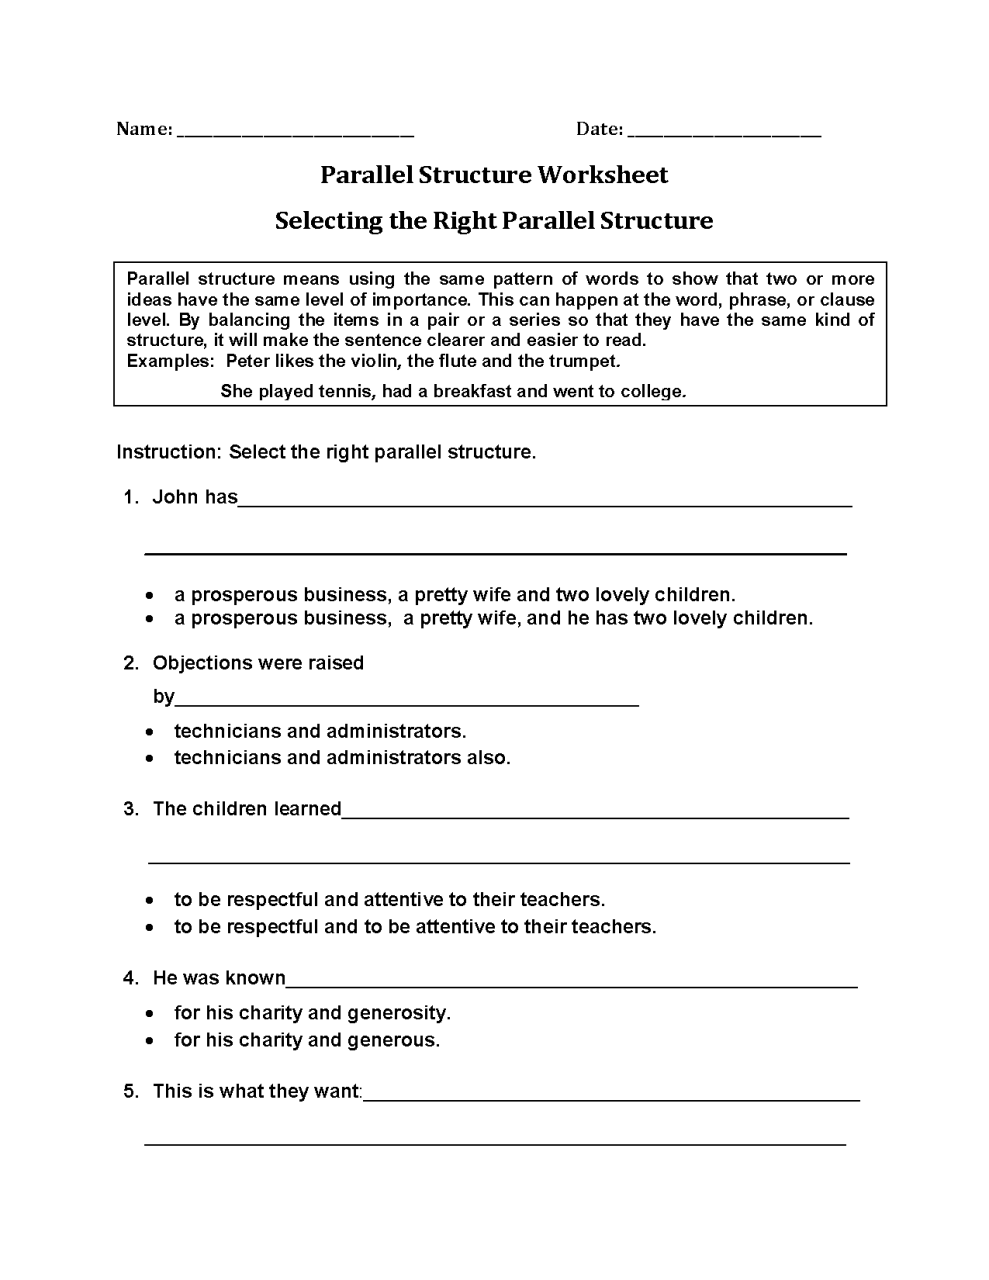 Parallel Structure Worksheet Pdf